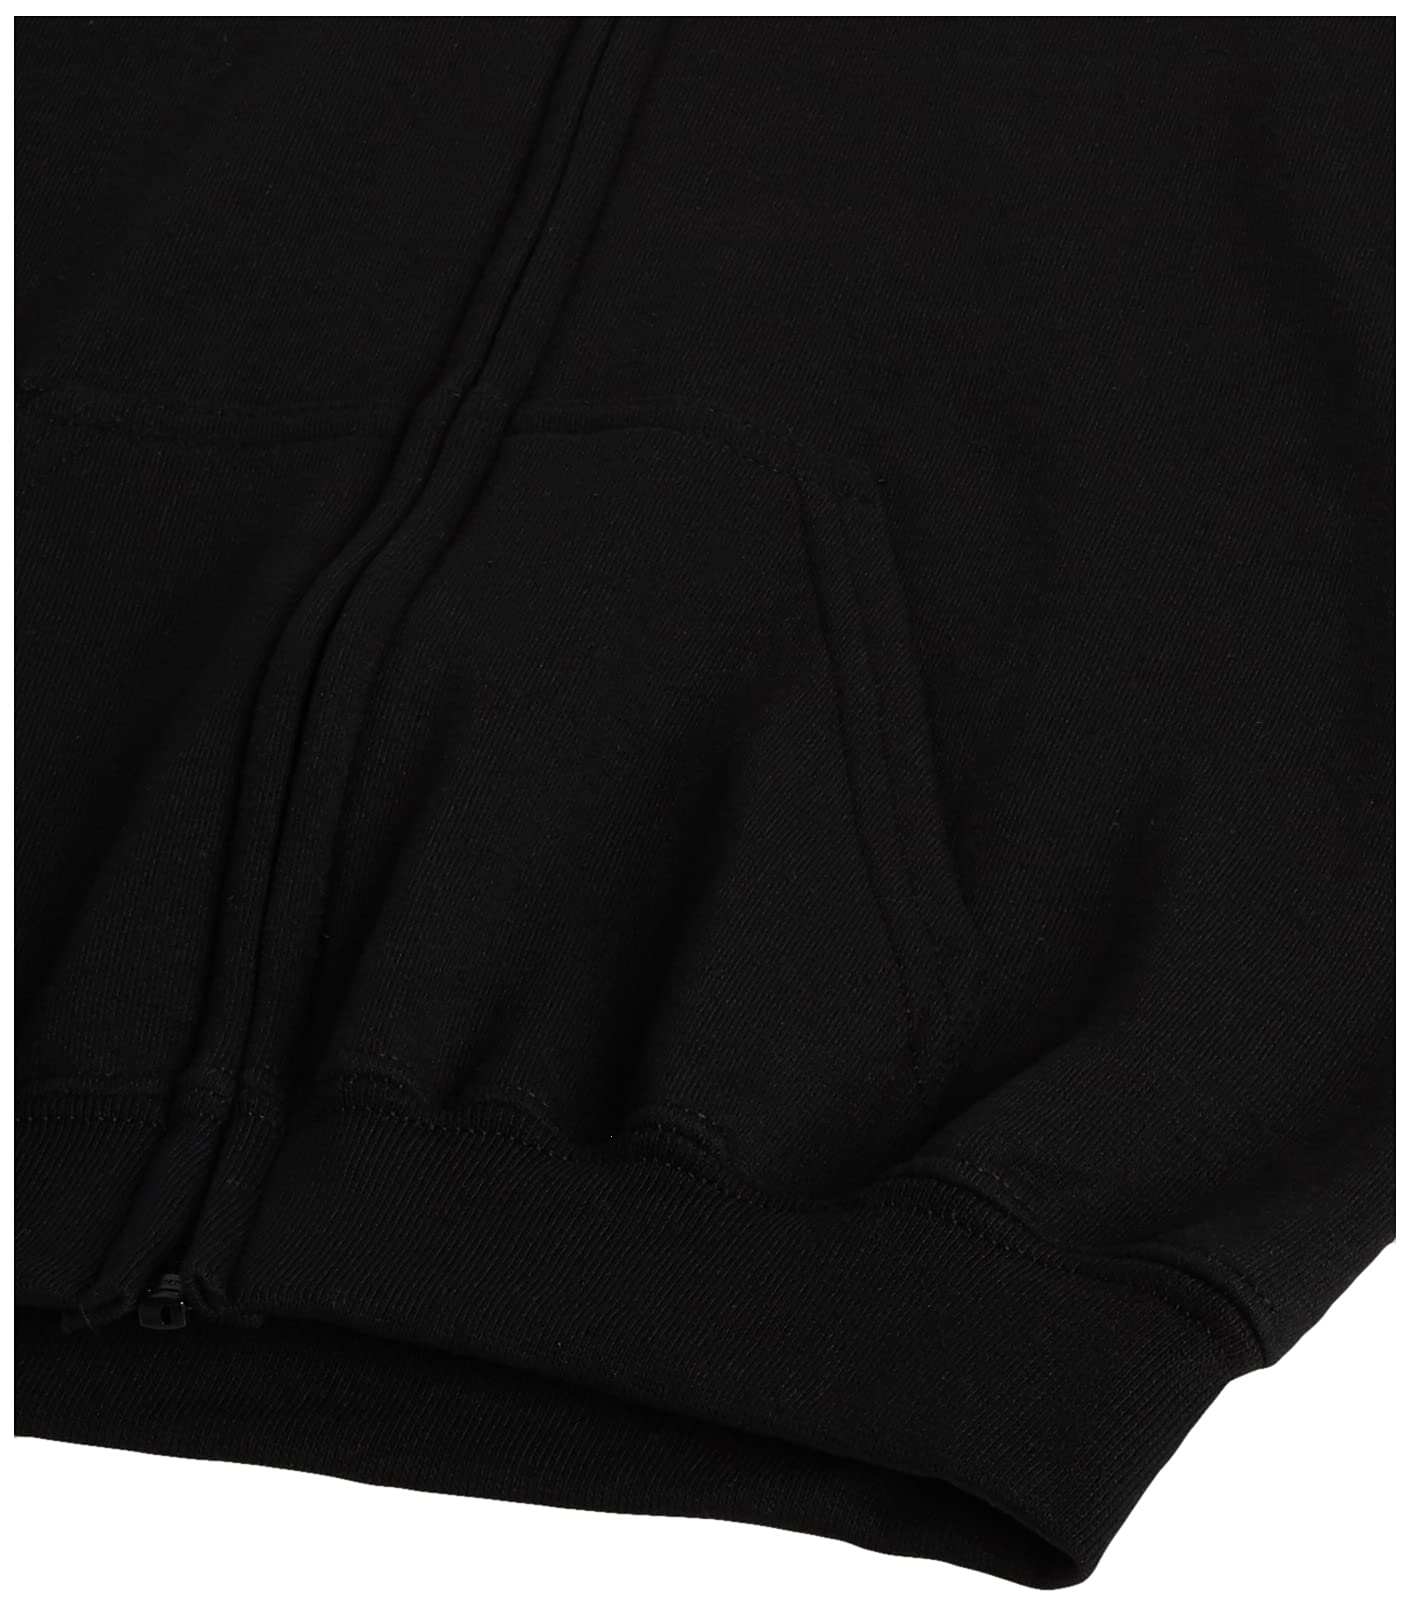 Gildan Kids Youth Full Zip Hooded Sweatshirt, Style G18600B